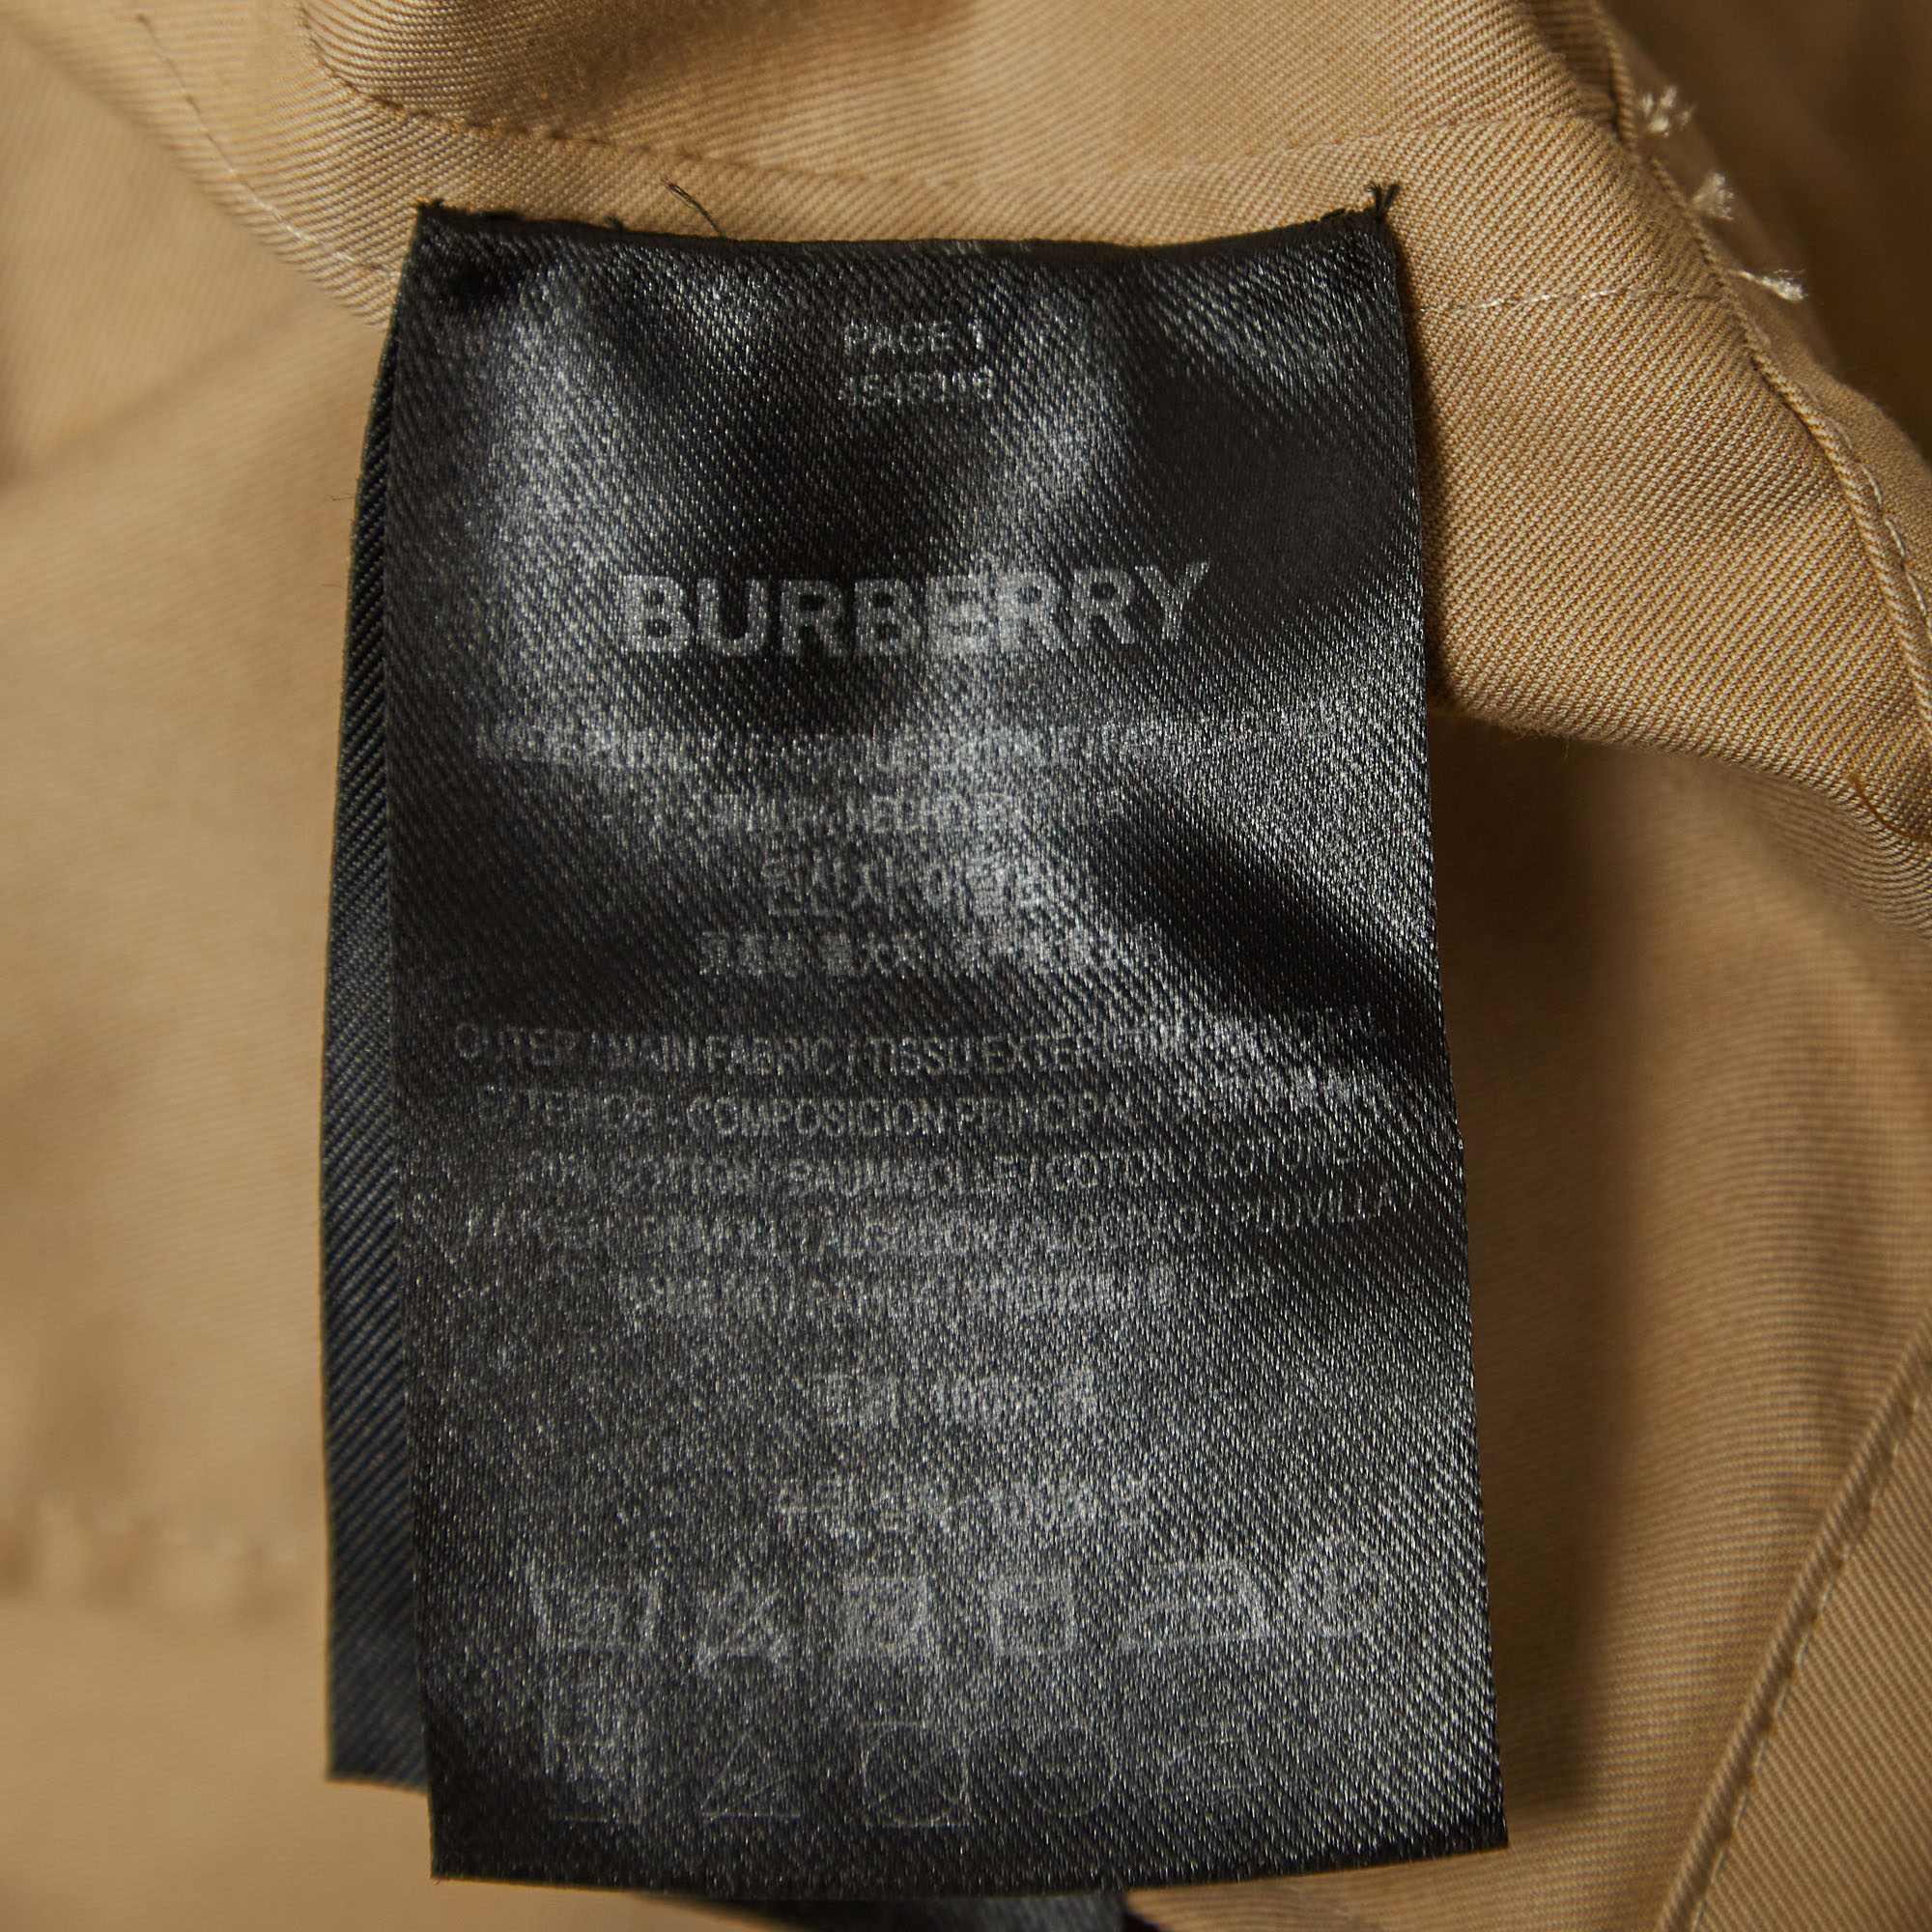 Burberry Beige Cotton Buttoned Long Sleeve Jumpsuit S